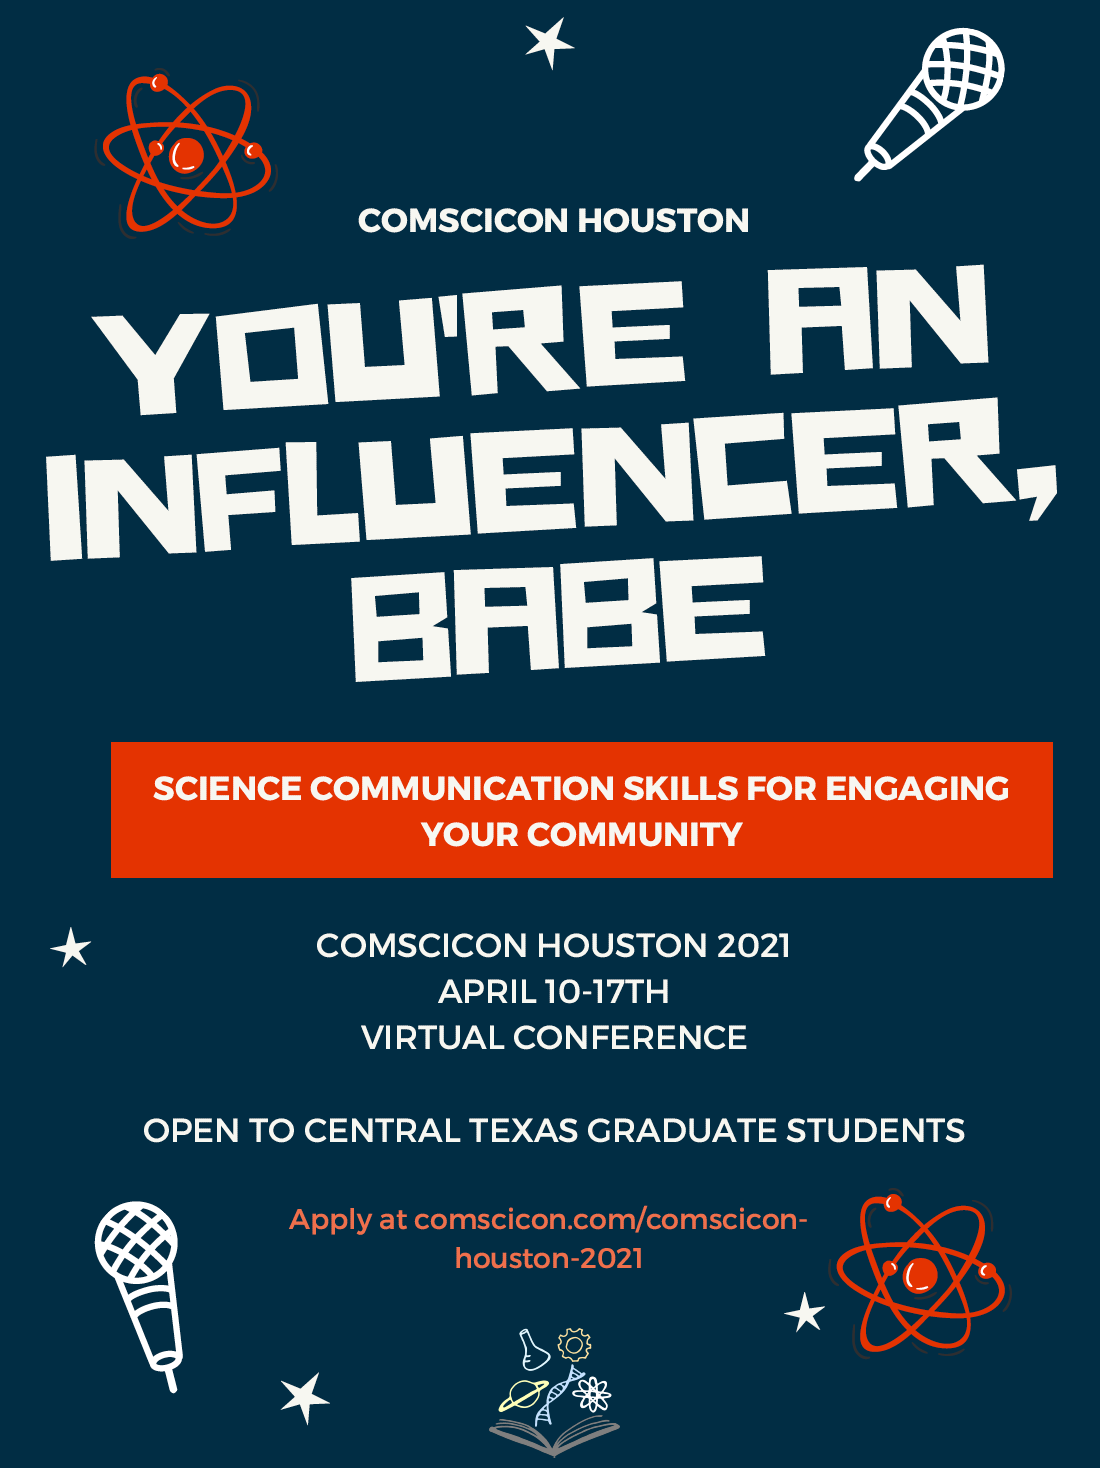 ComSciCon Houston 2021 will be held virtually April 10-17.